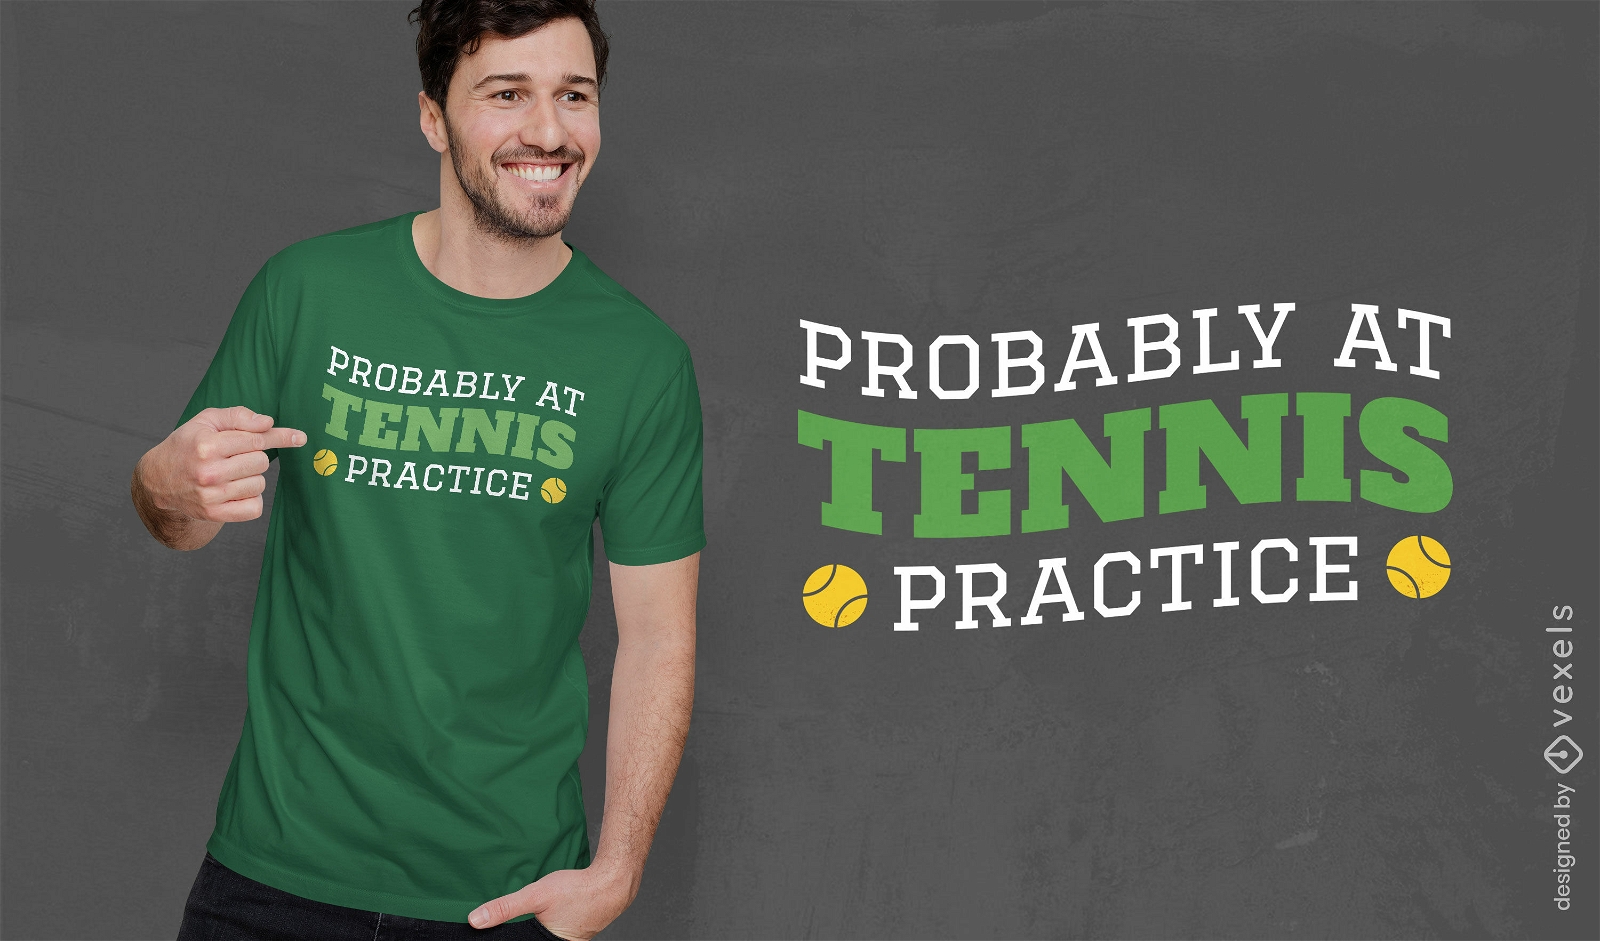 Tennis practice slogan t-shirt design